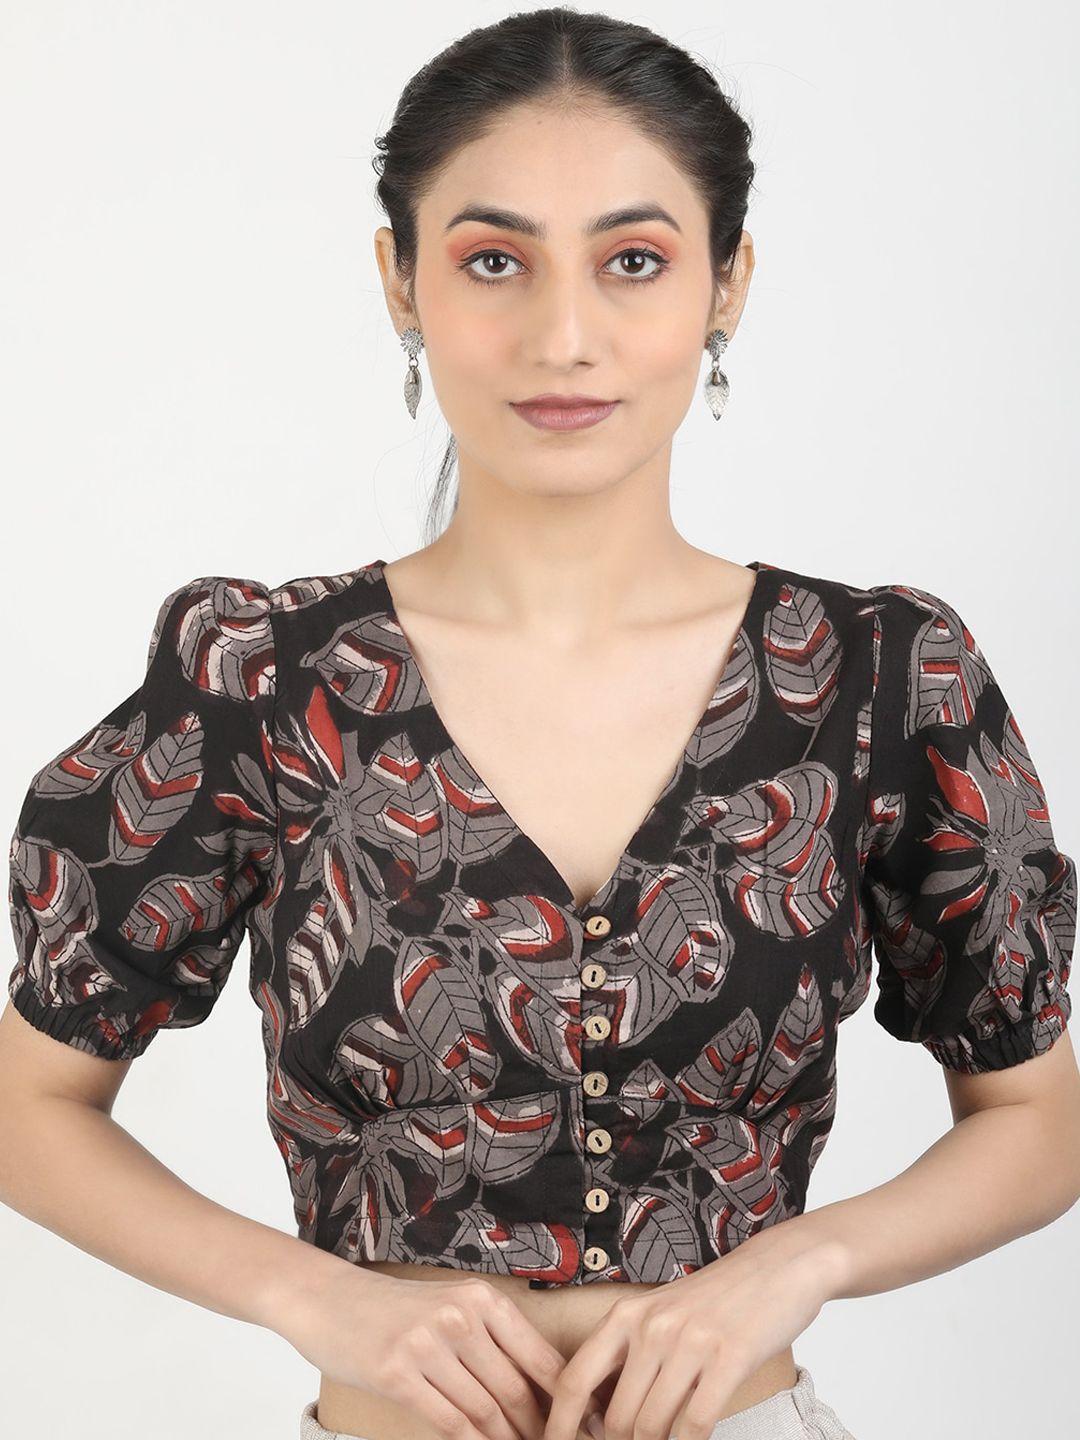 llajja block printed pure cotton saree blouse